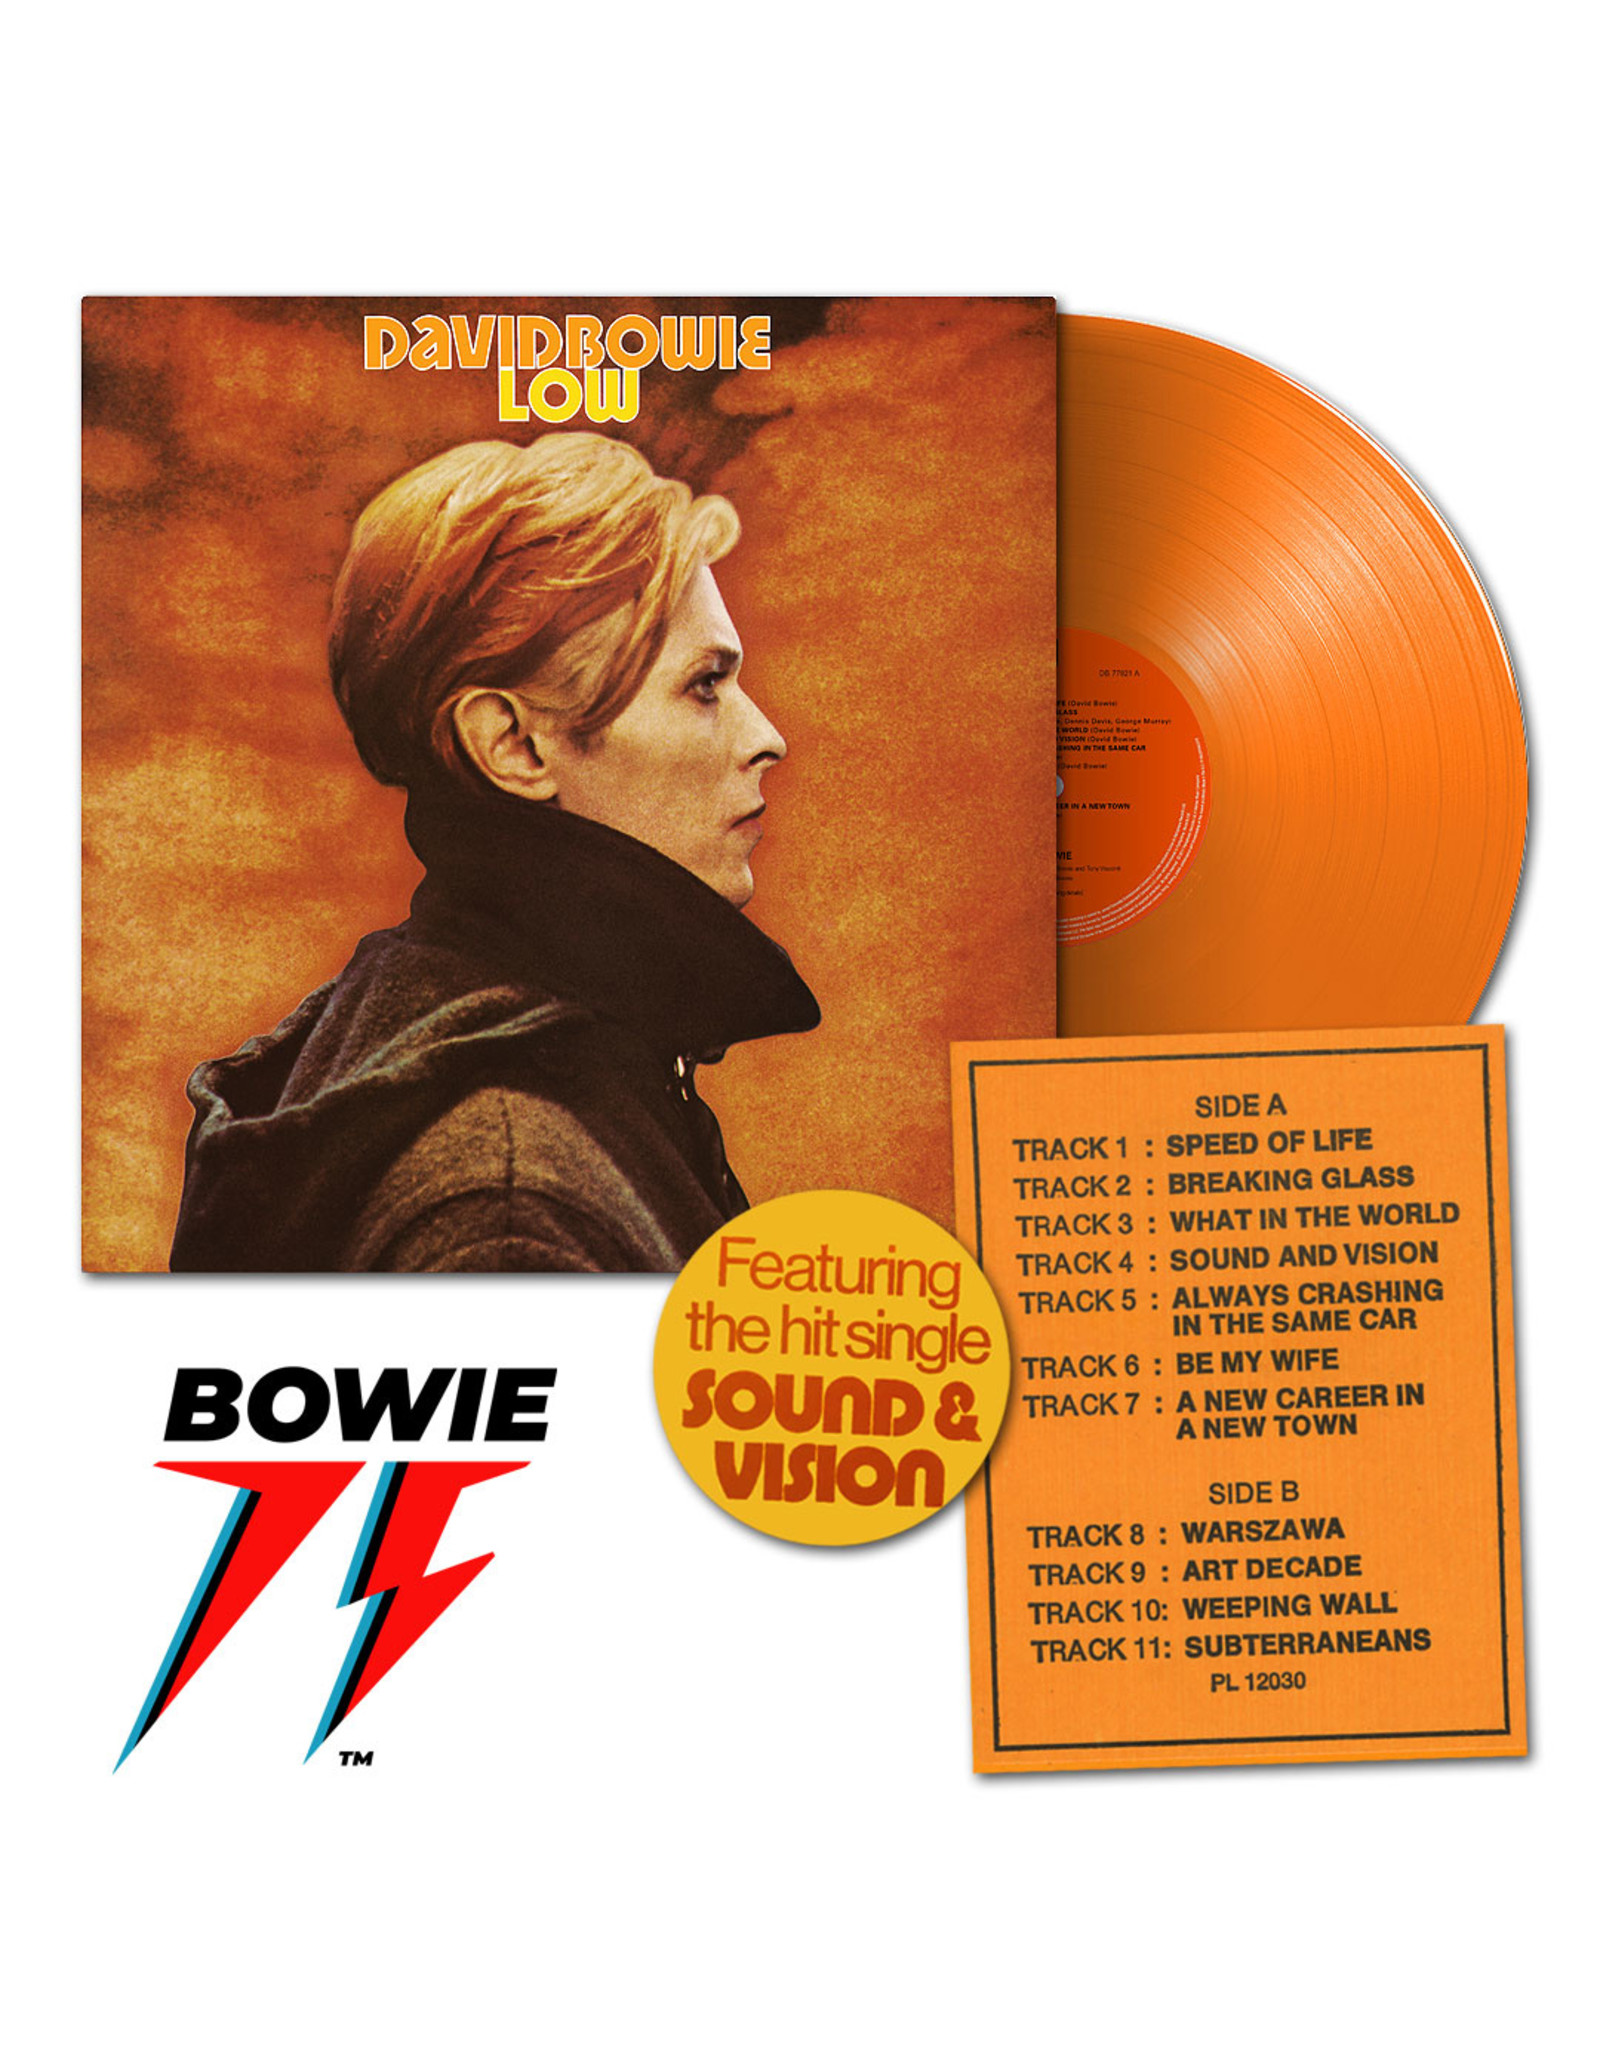 David Bowie - Low (45th Anniversary) [Exclusive Orange Vinyl]